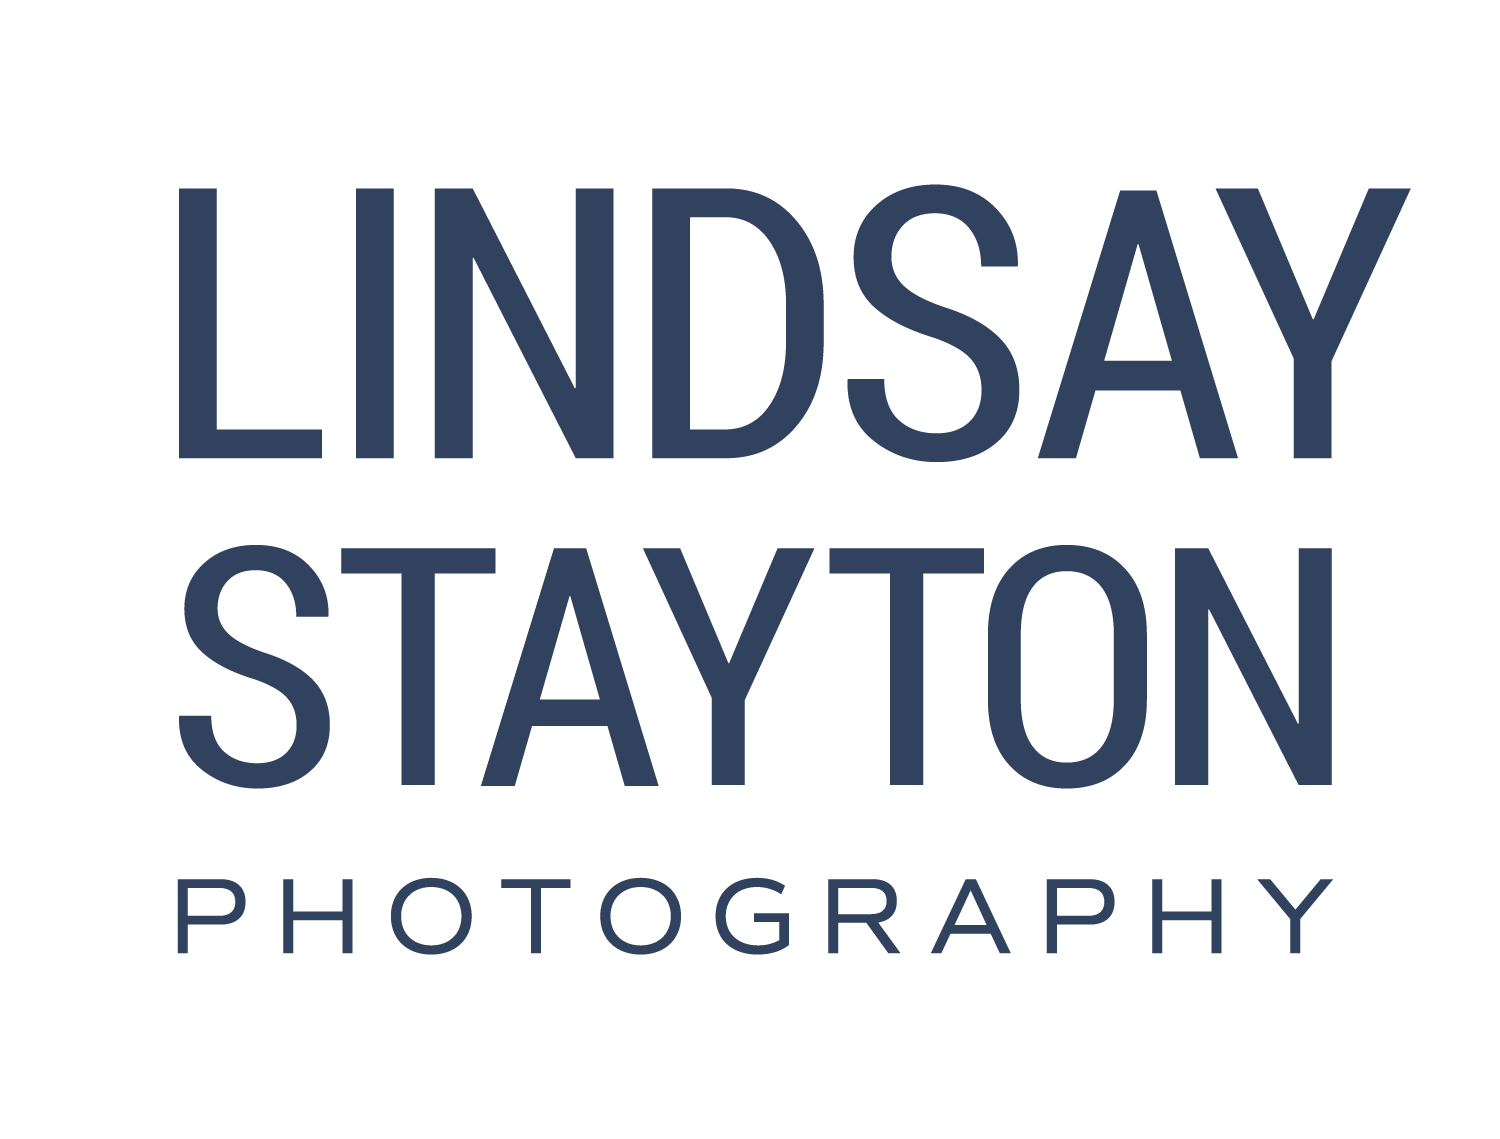 Lindsay Stayton Photography